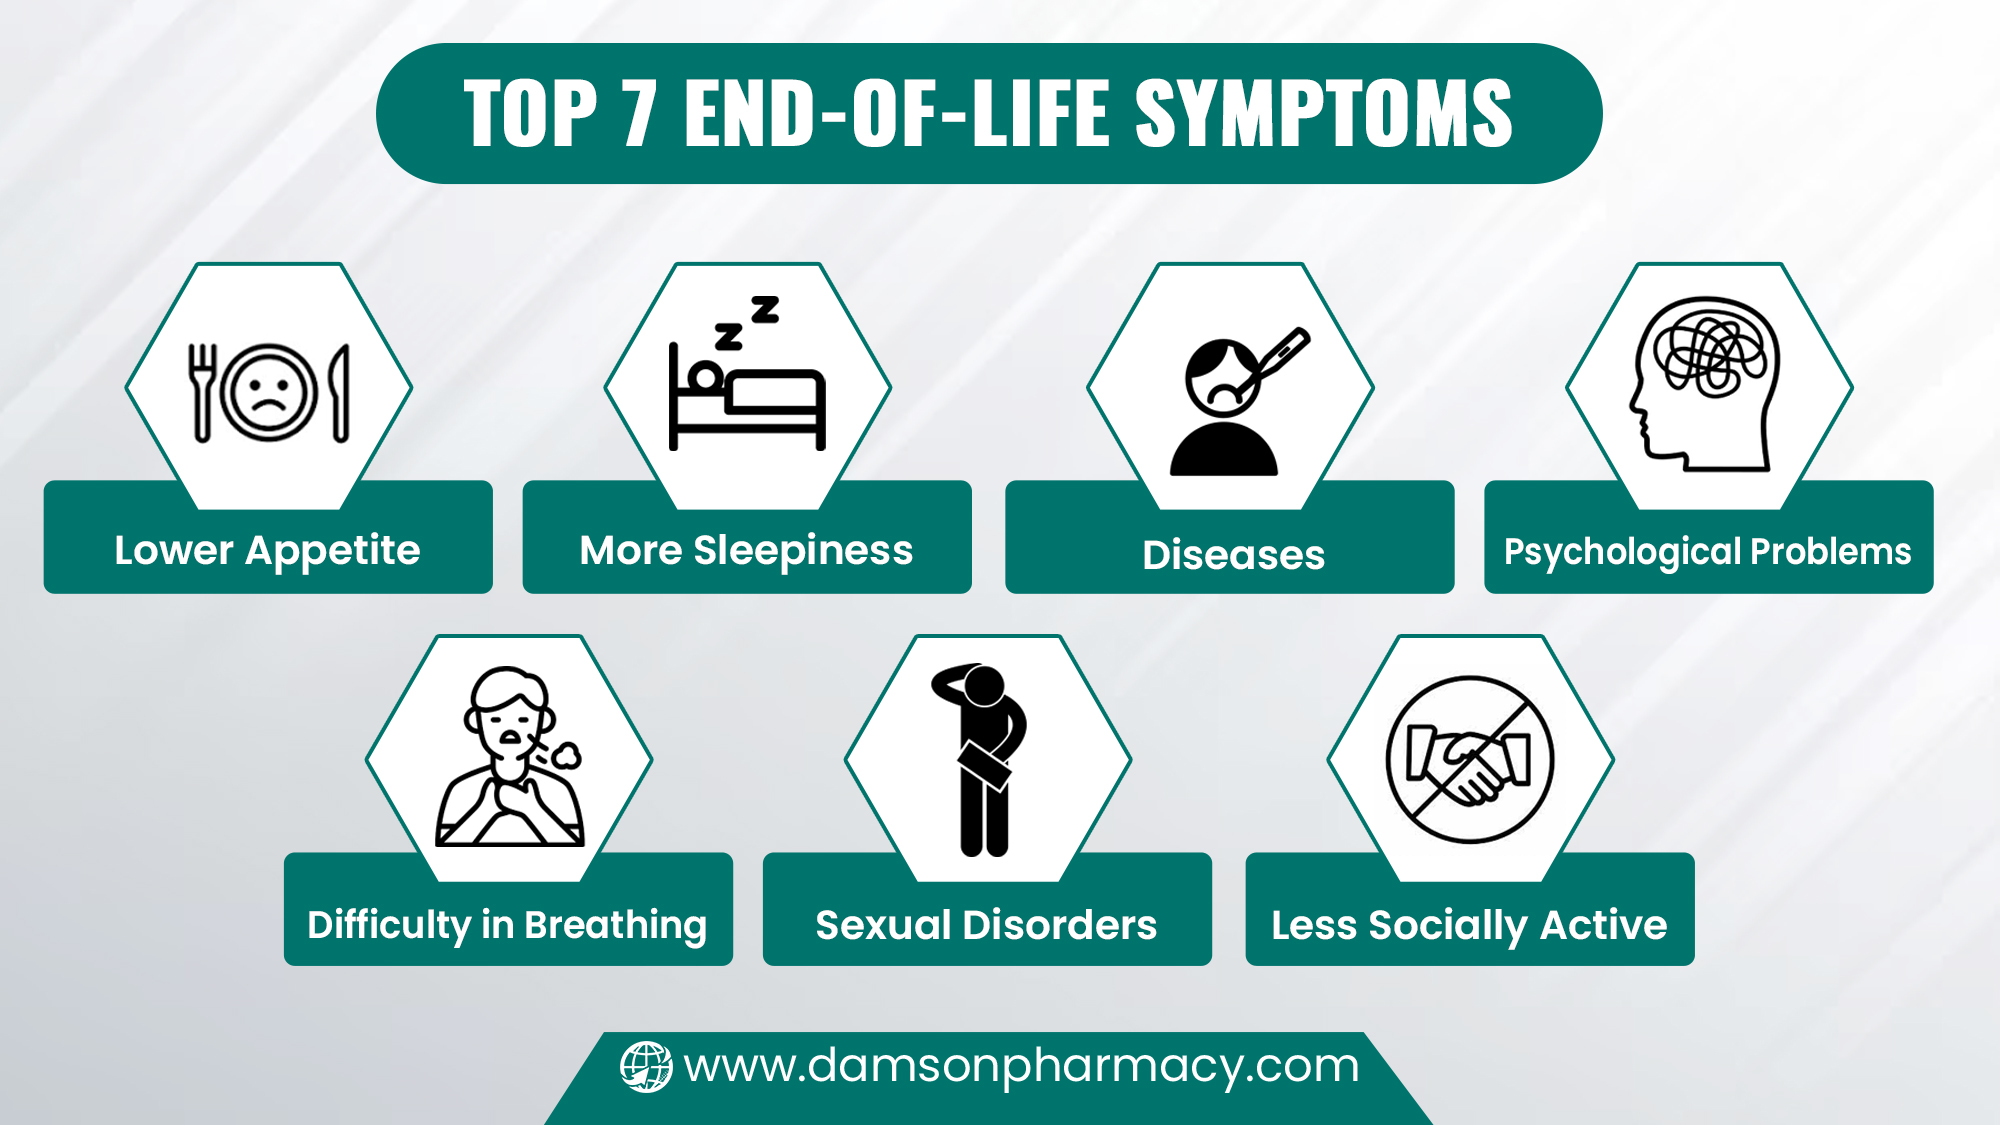 Top 7 End-of-Life Symptoms